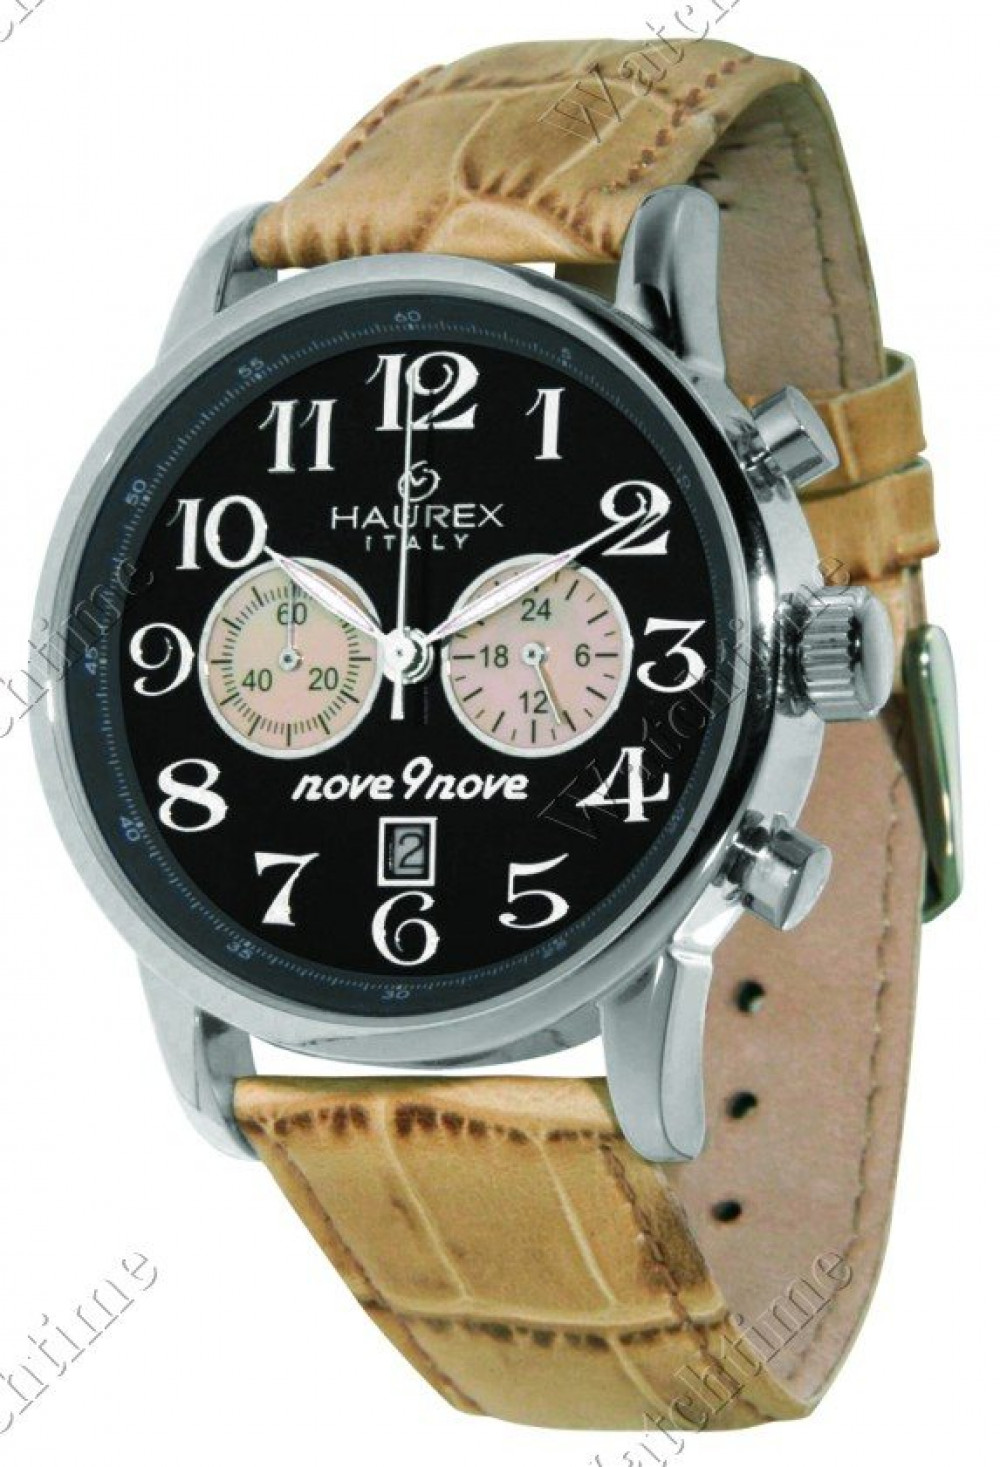 Zegarek firmy Haurex, model Nouve 9 Nouve